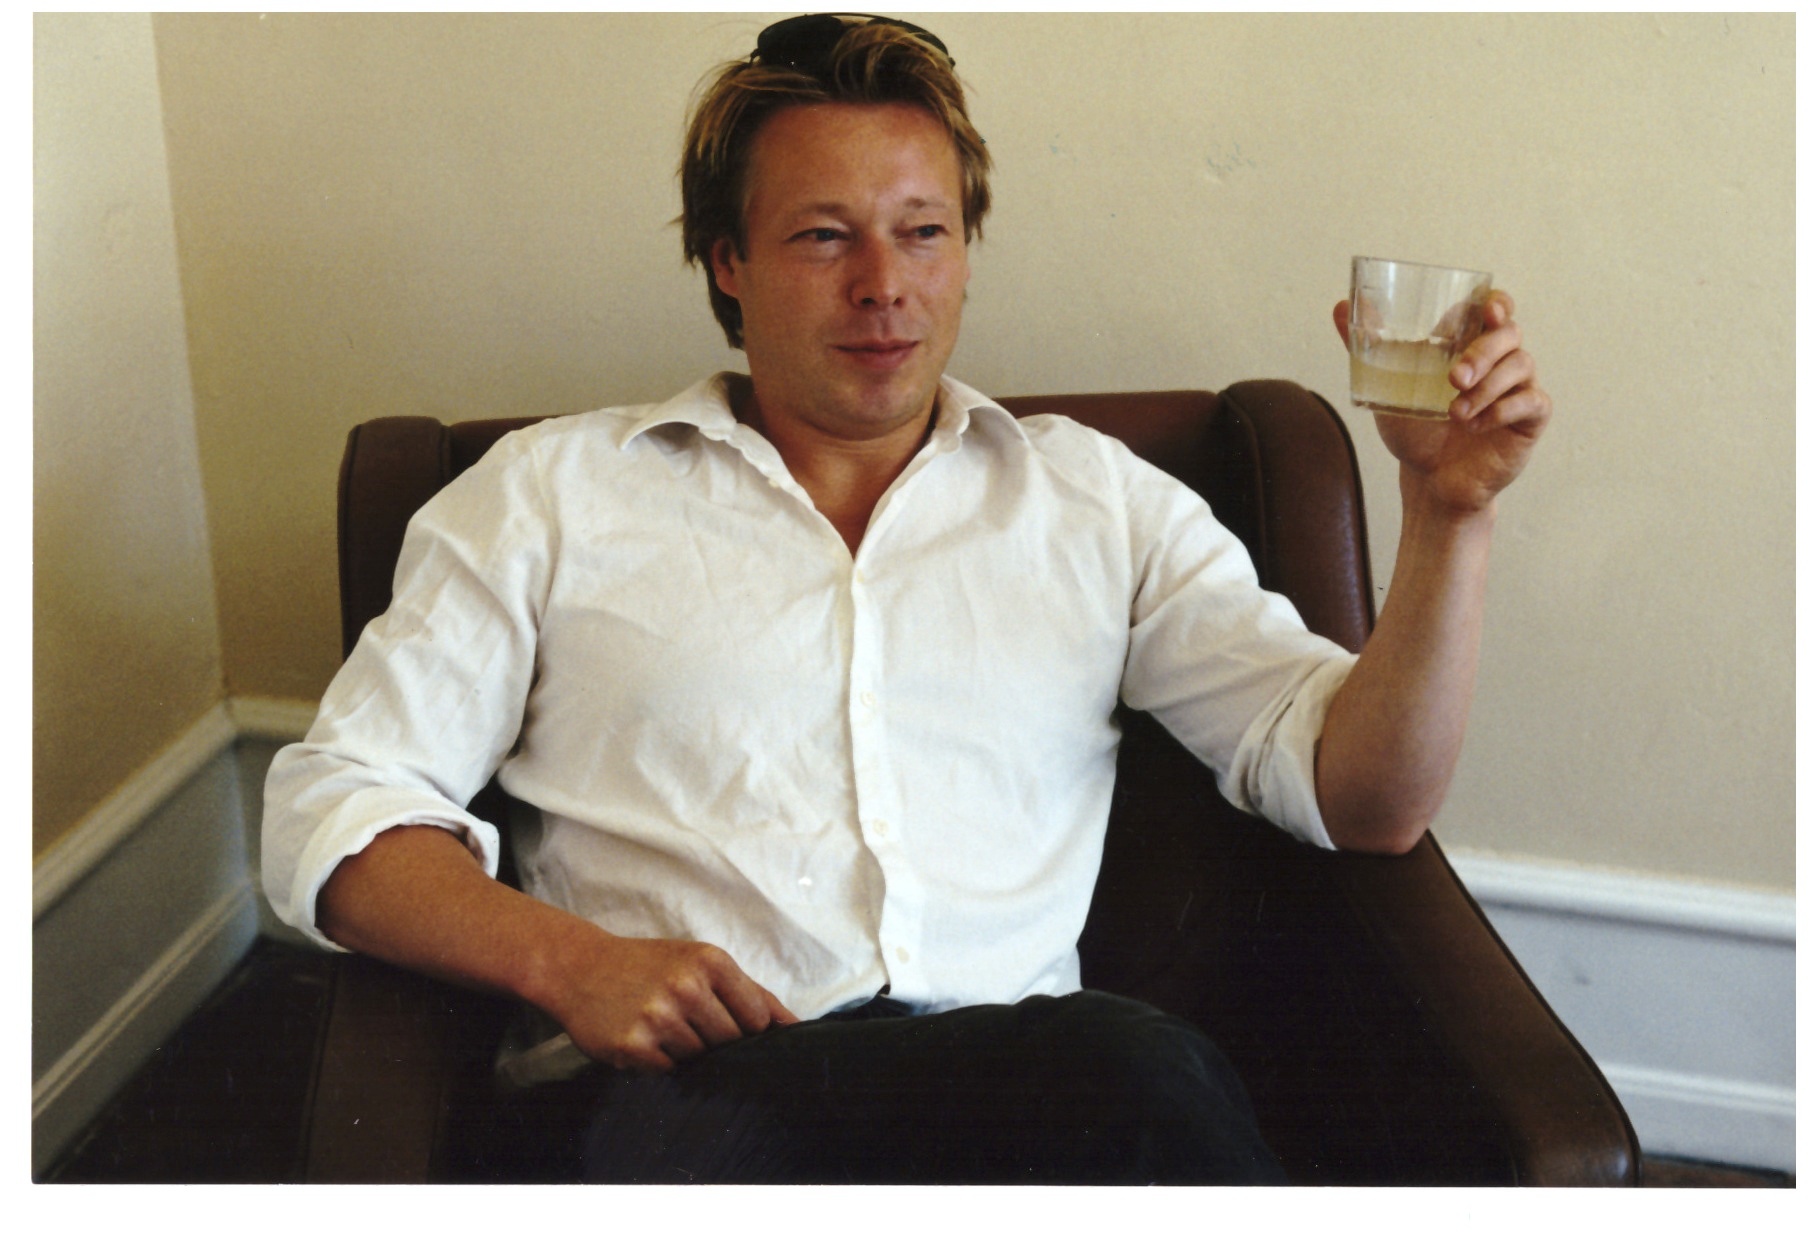  Staffan Boije af Gennäs 1999 